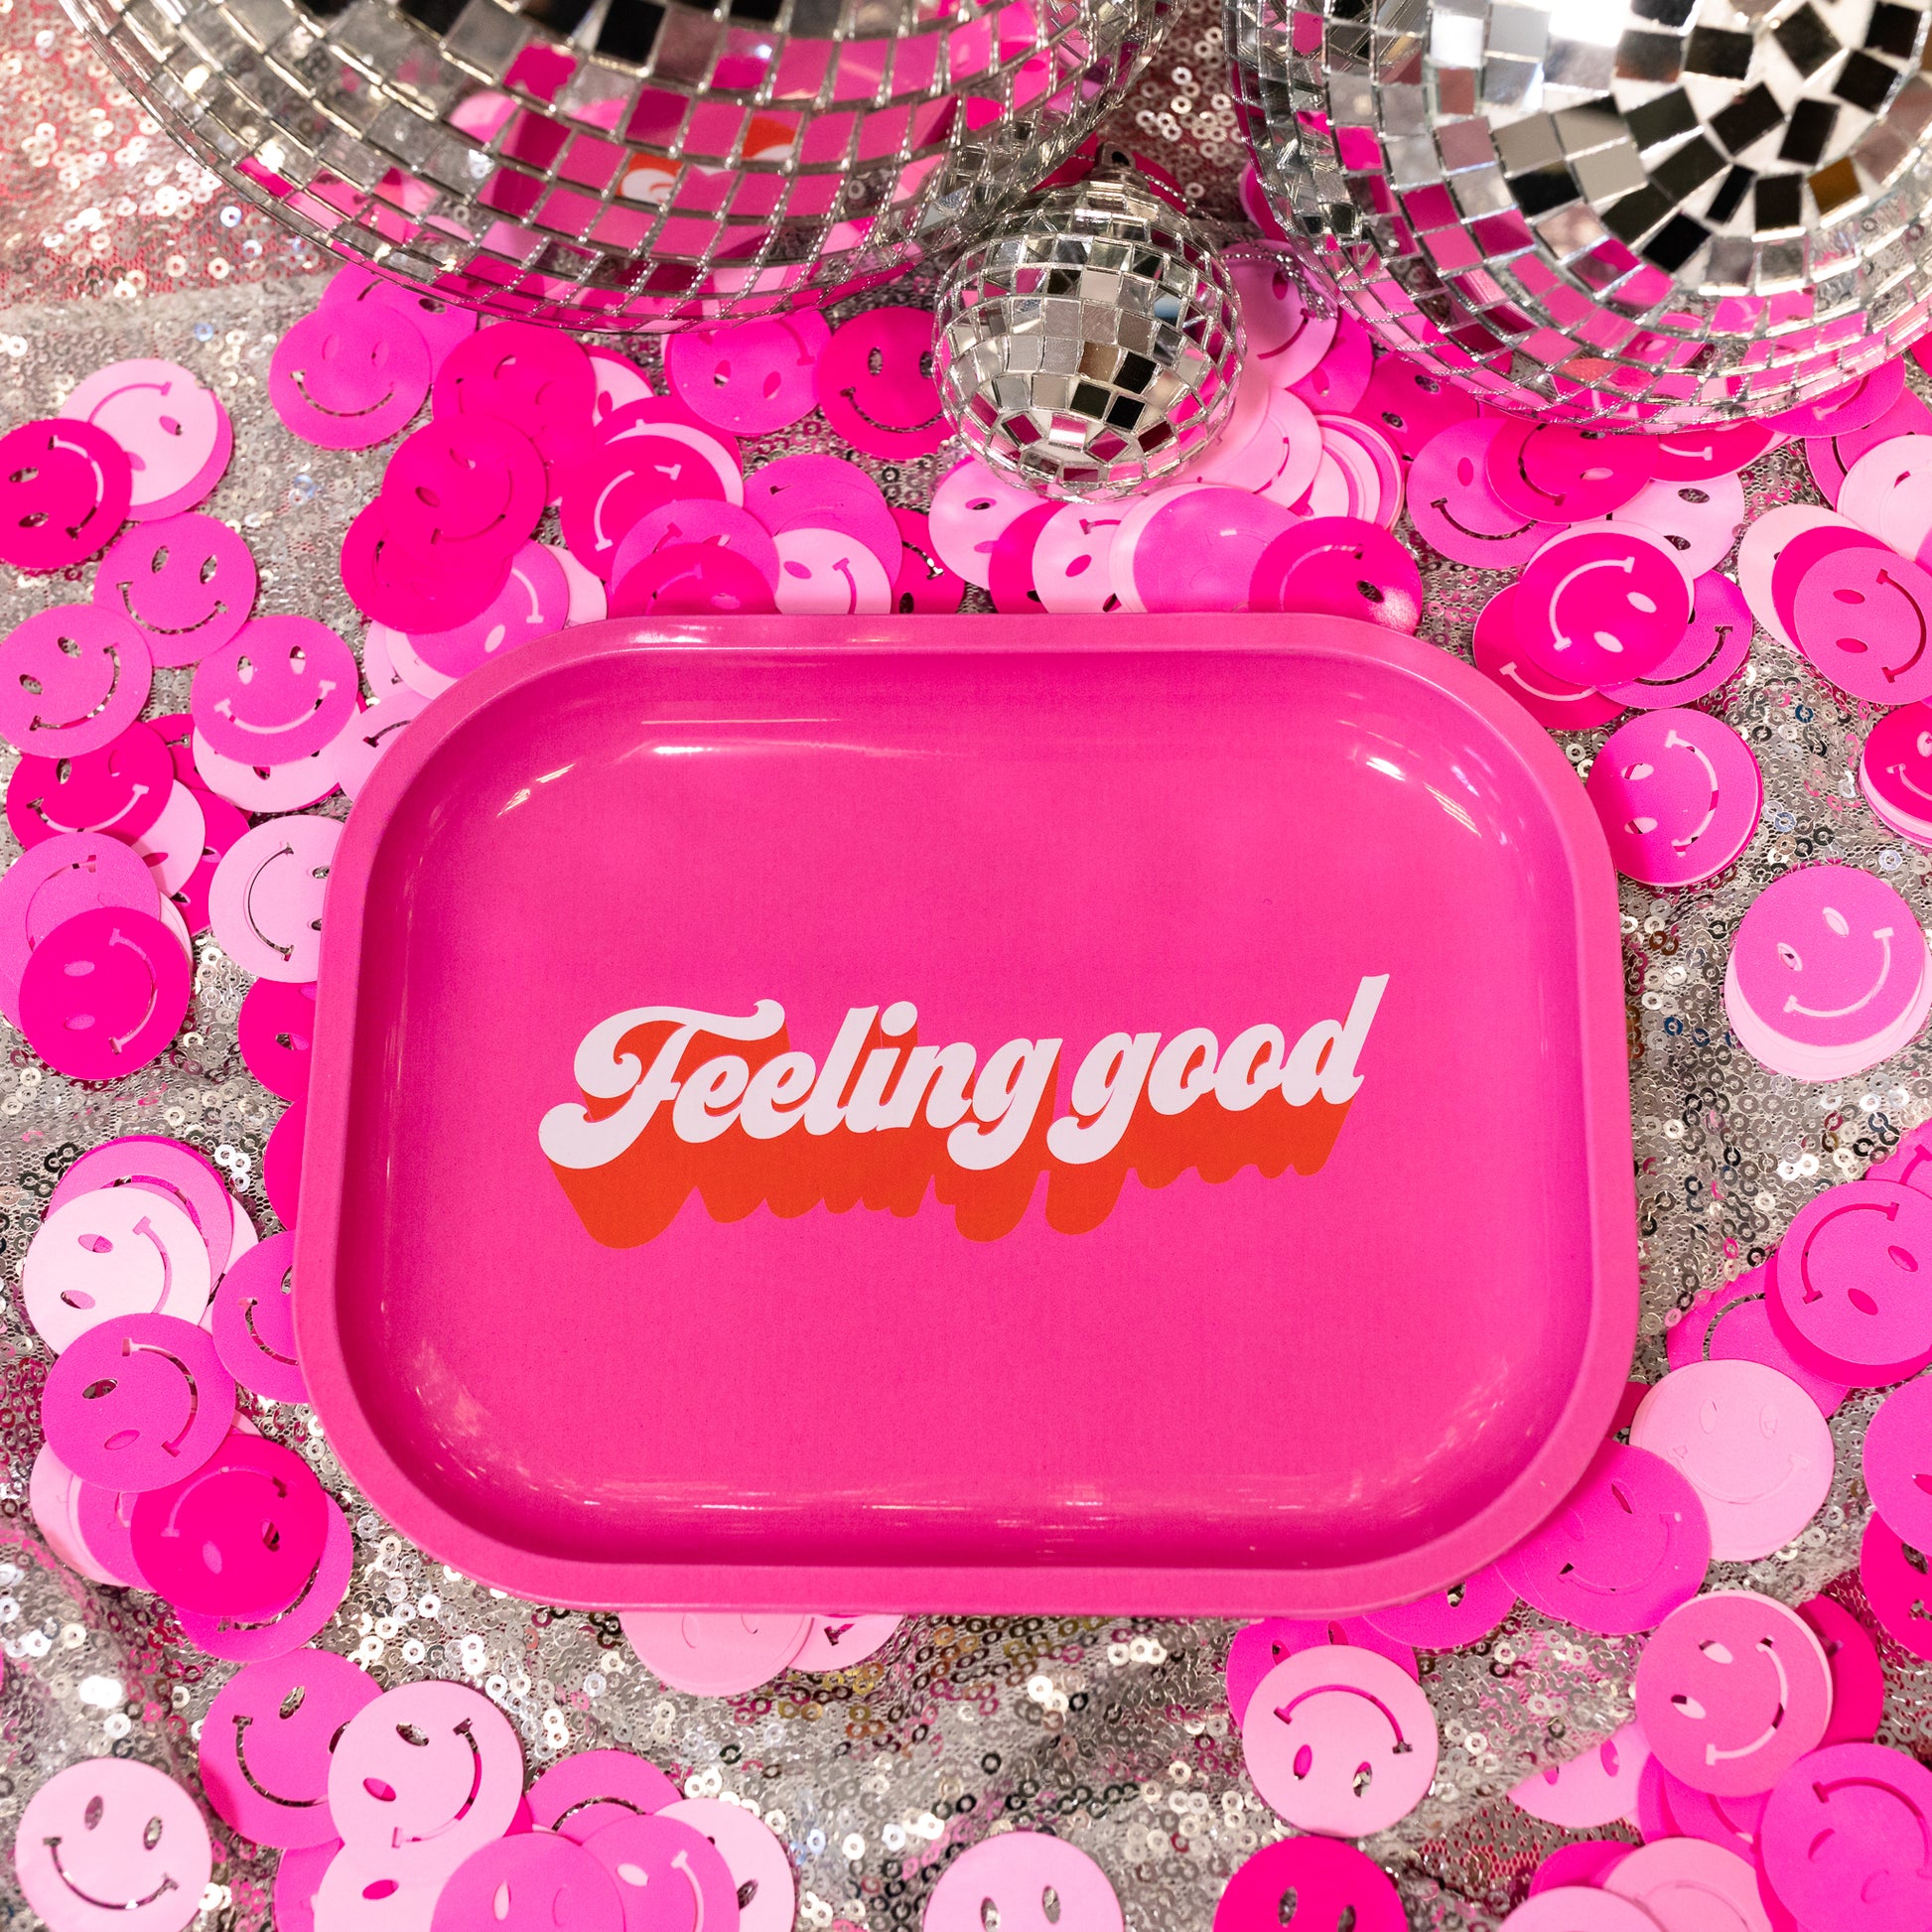 feeling good hot pink tray